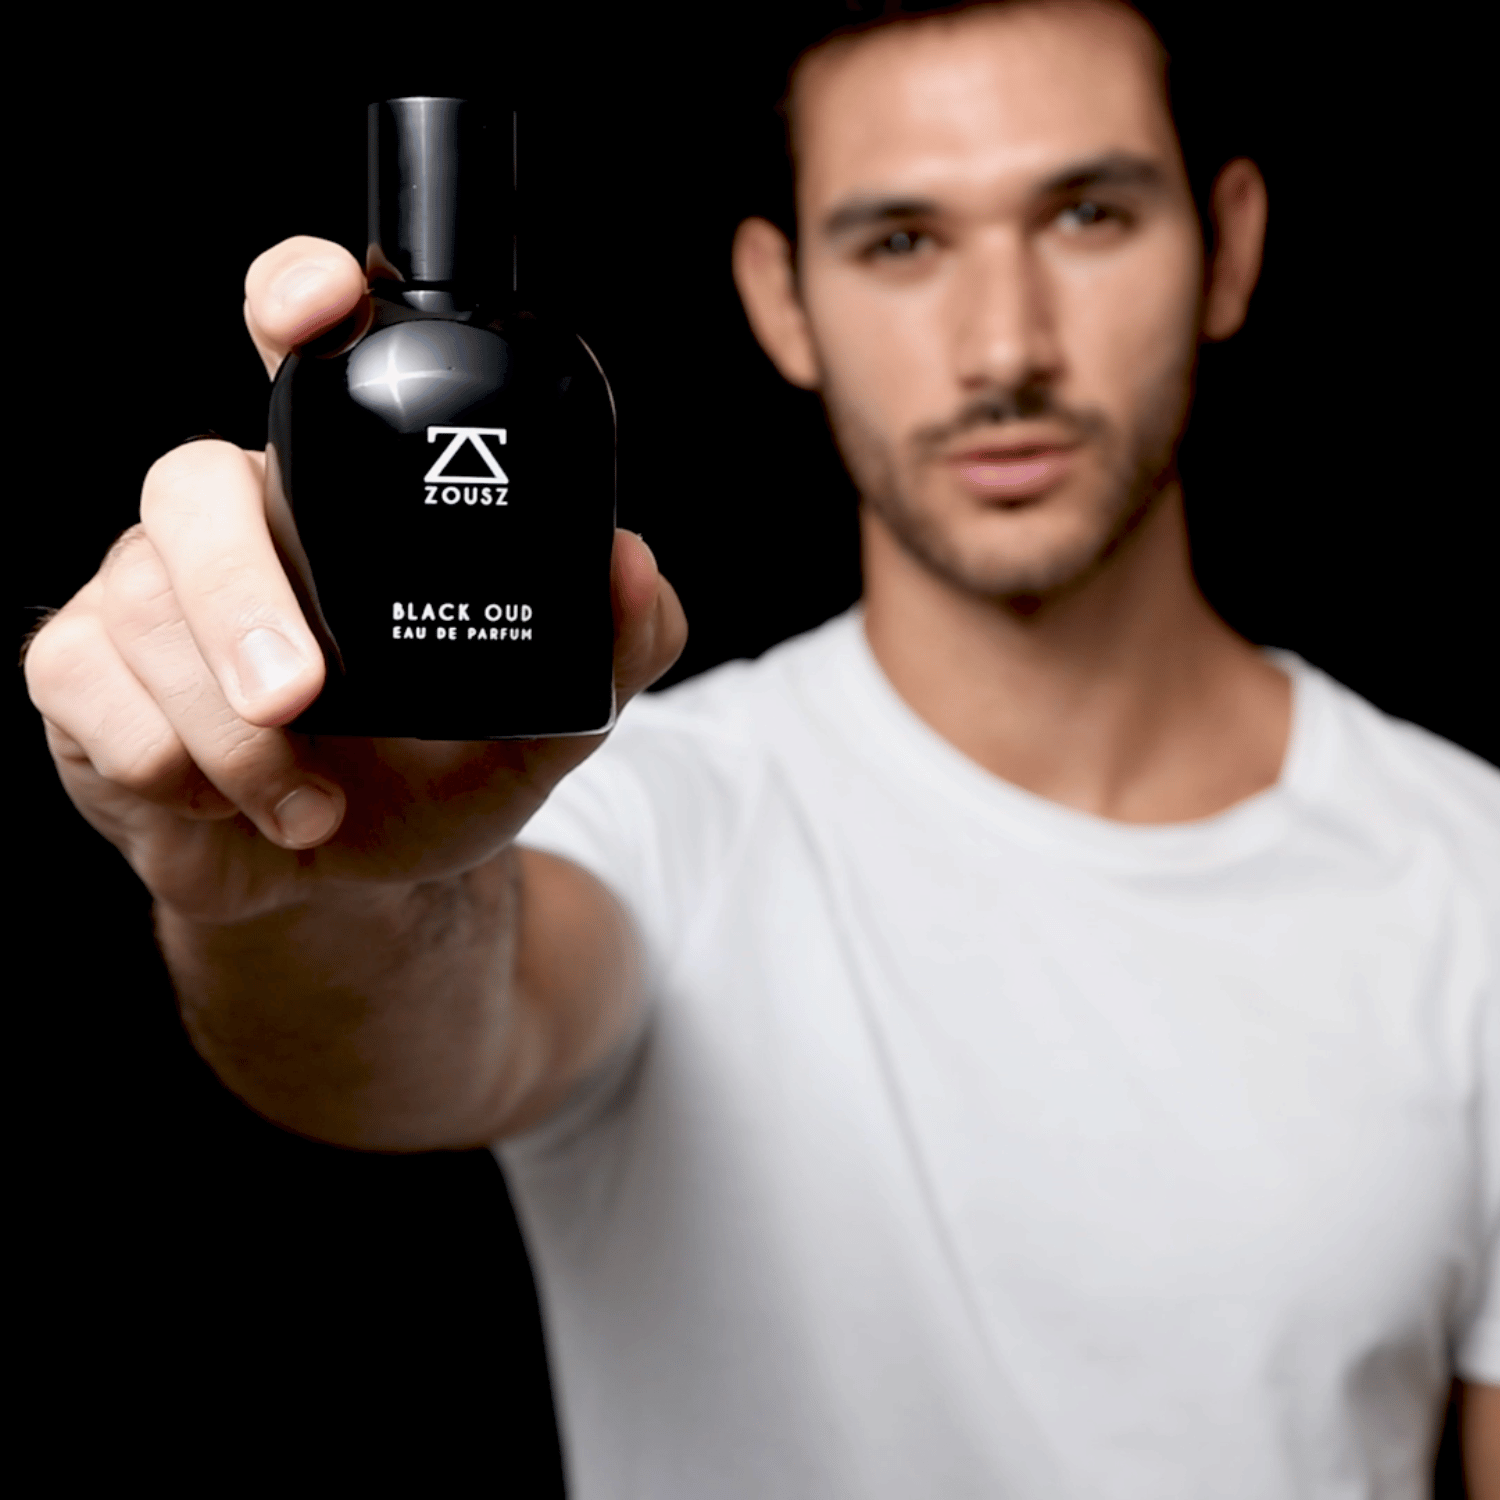 Buy Perfume Gift Set for Men Zousz ZOUSZ